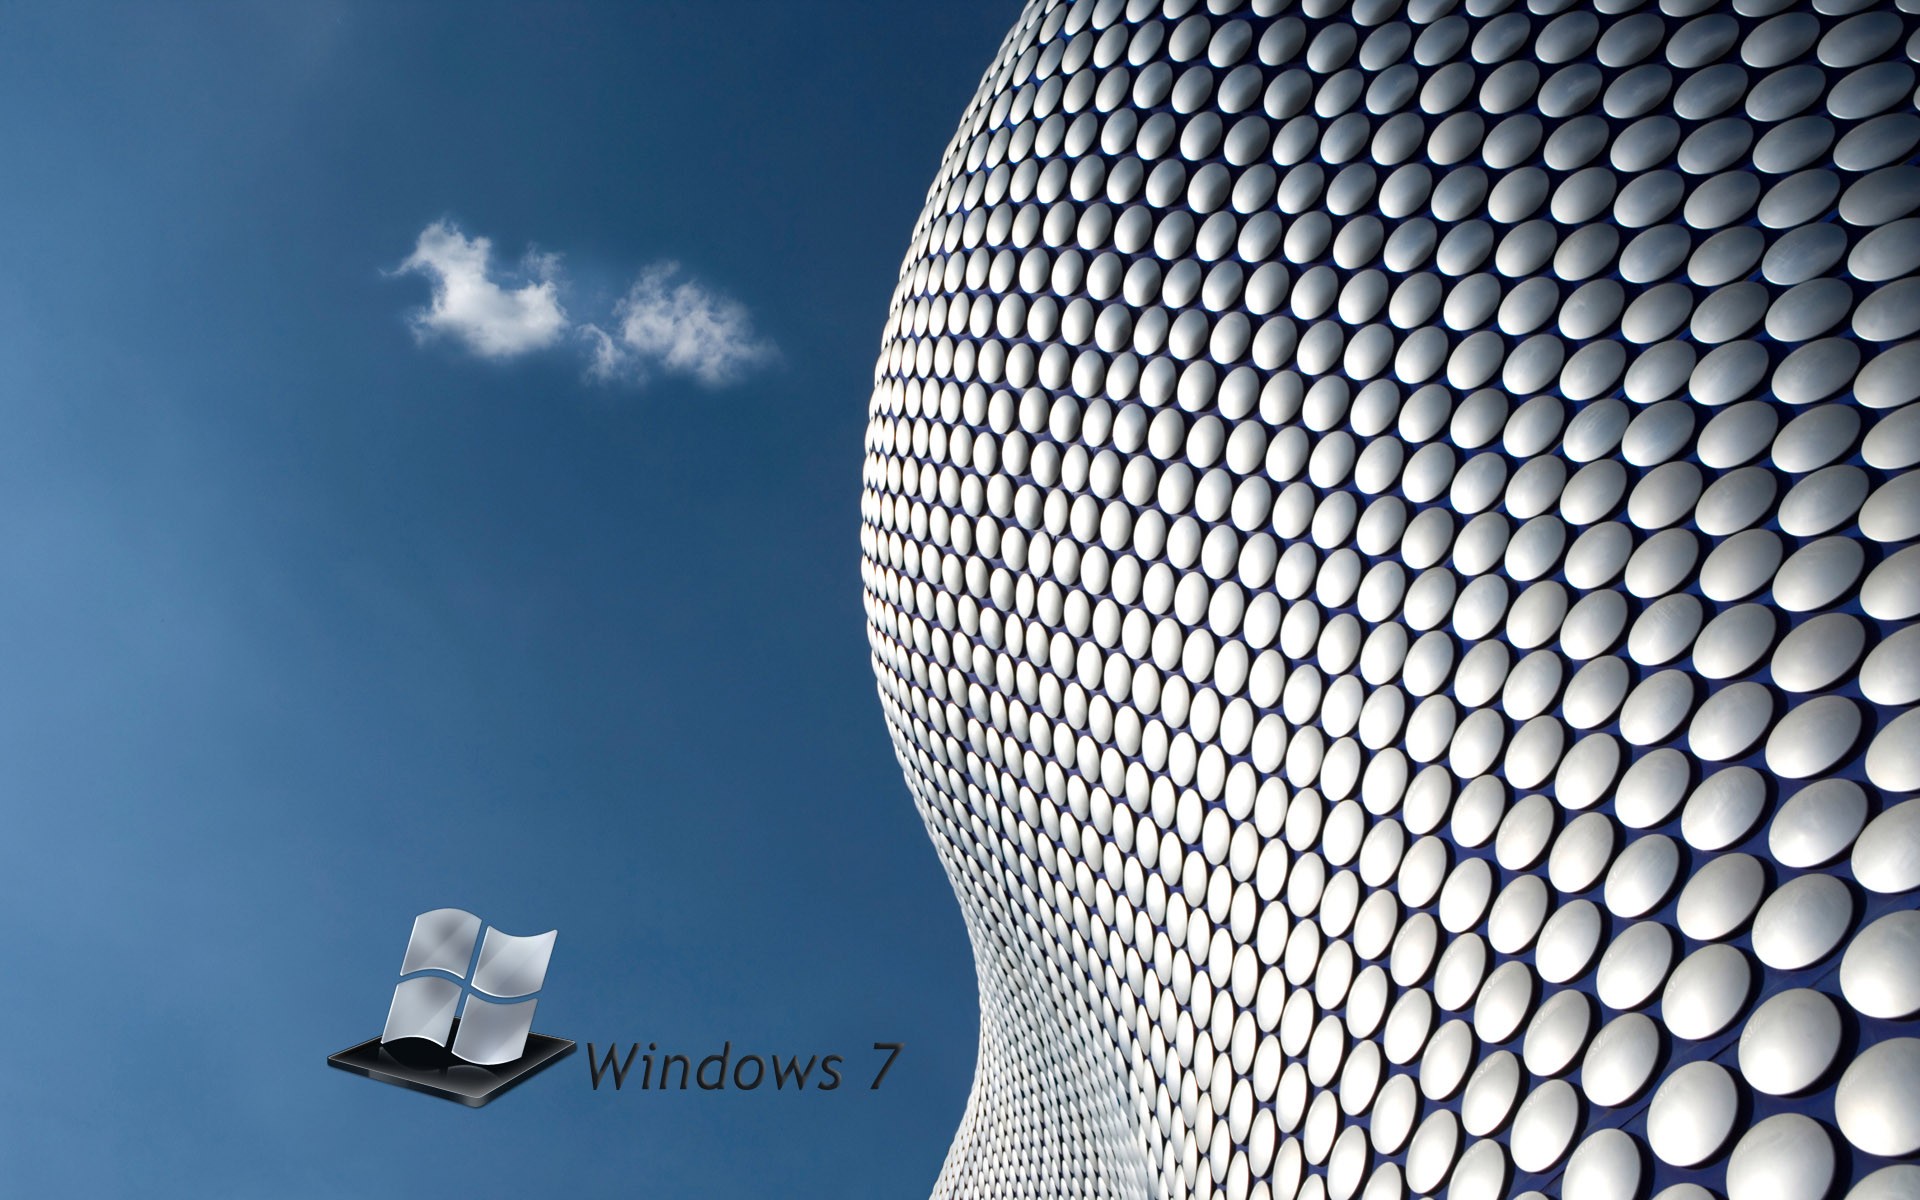 Windows 7, technology, Microsoft Windows, logos - desktop wallpaper